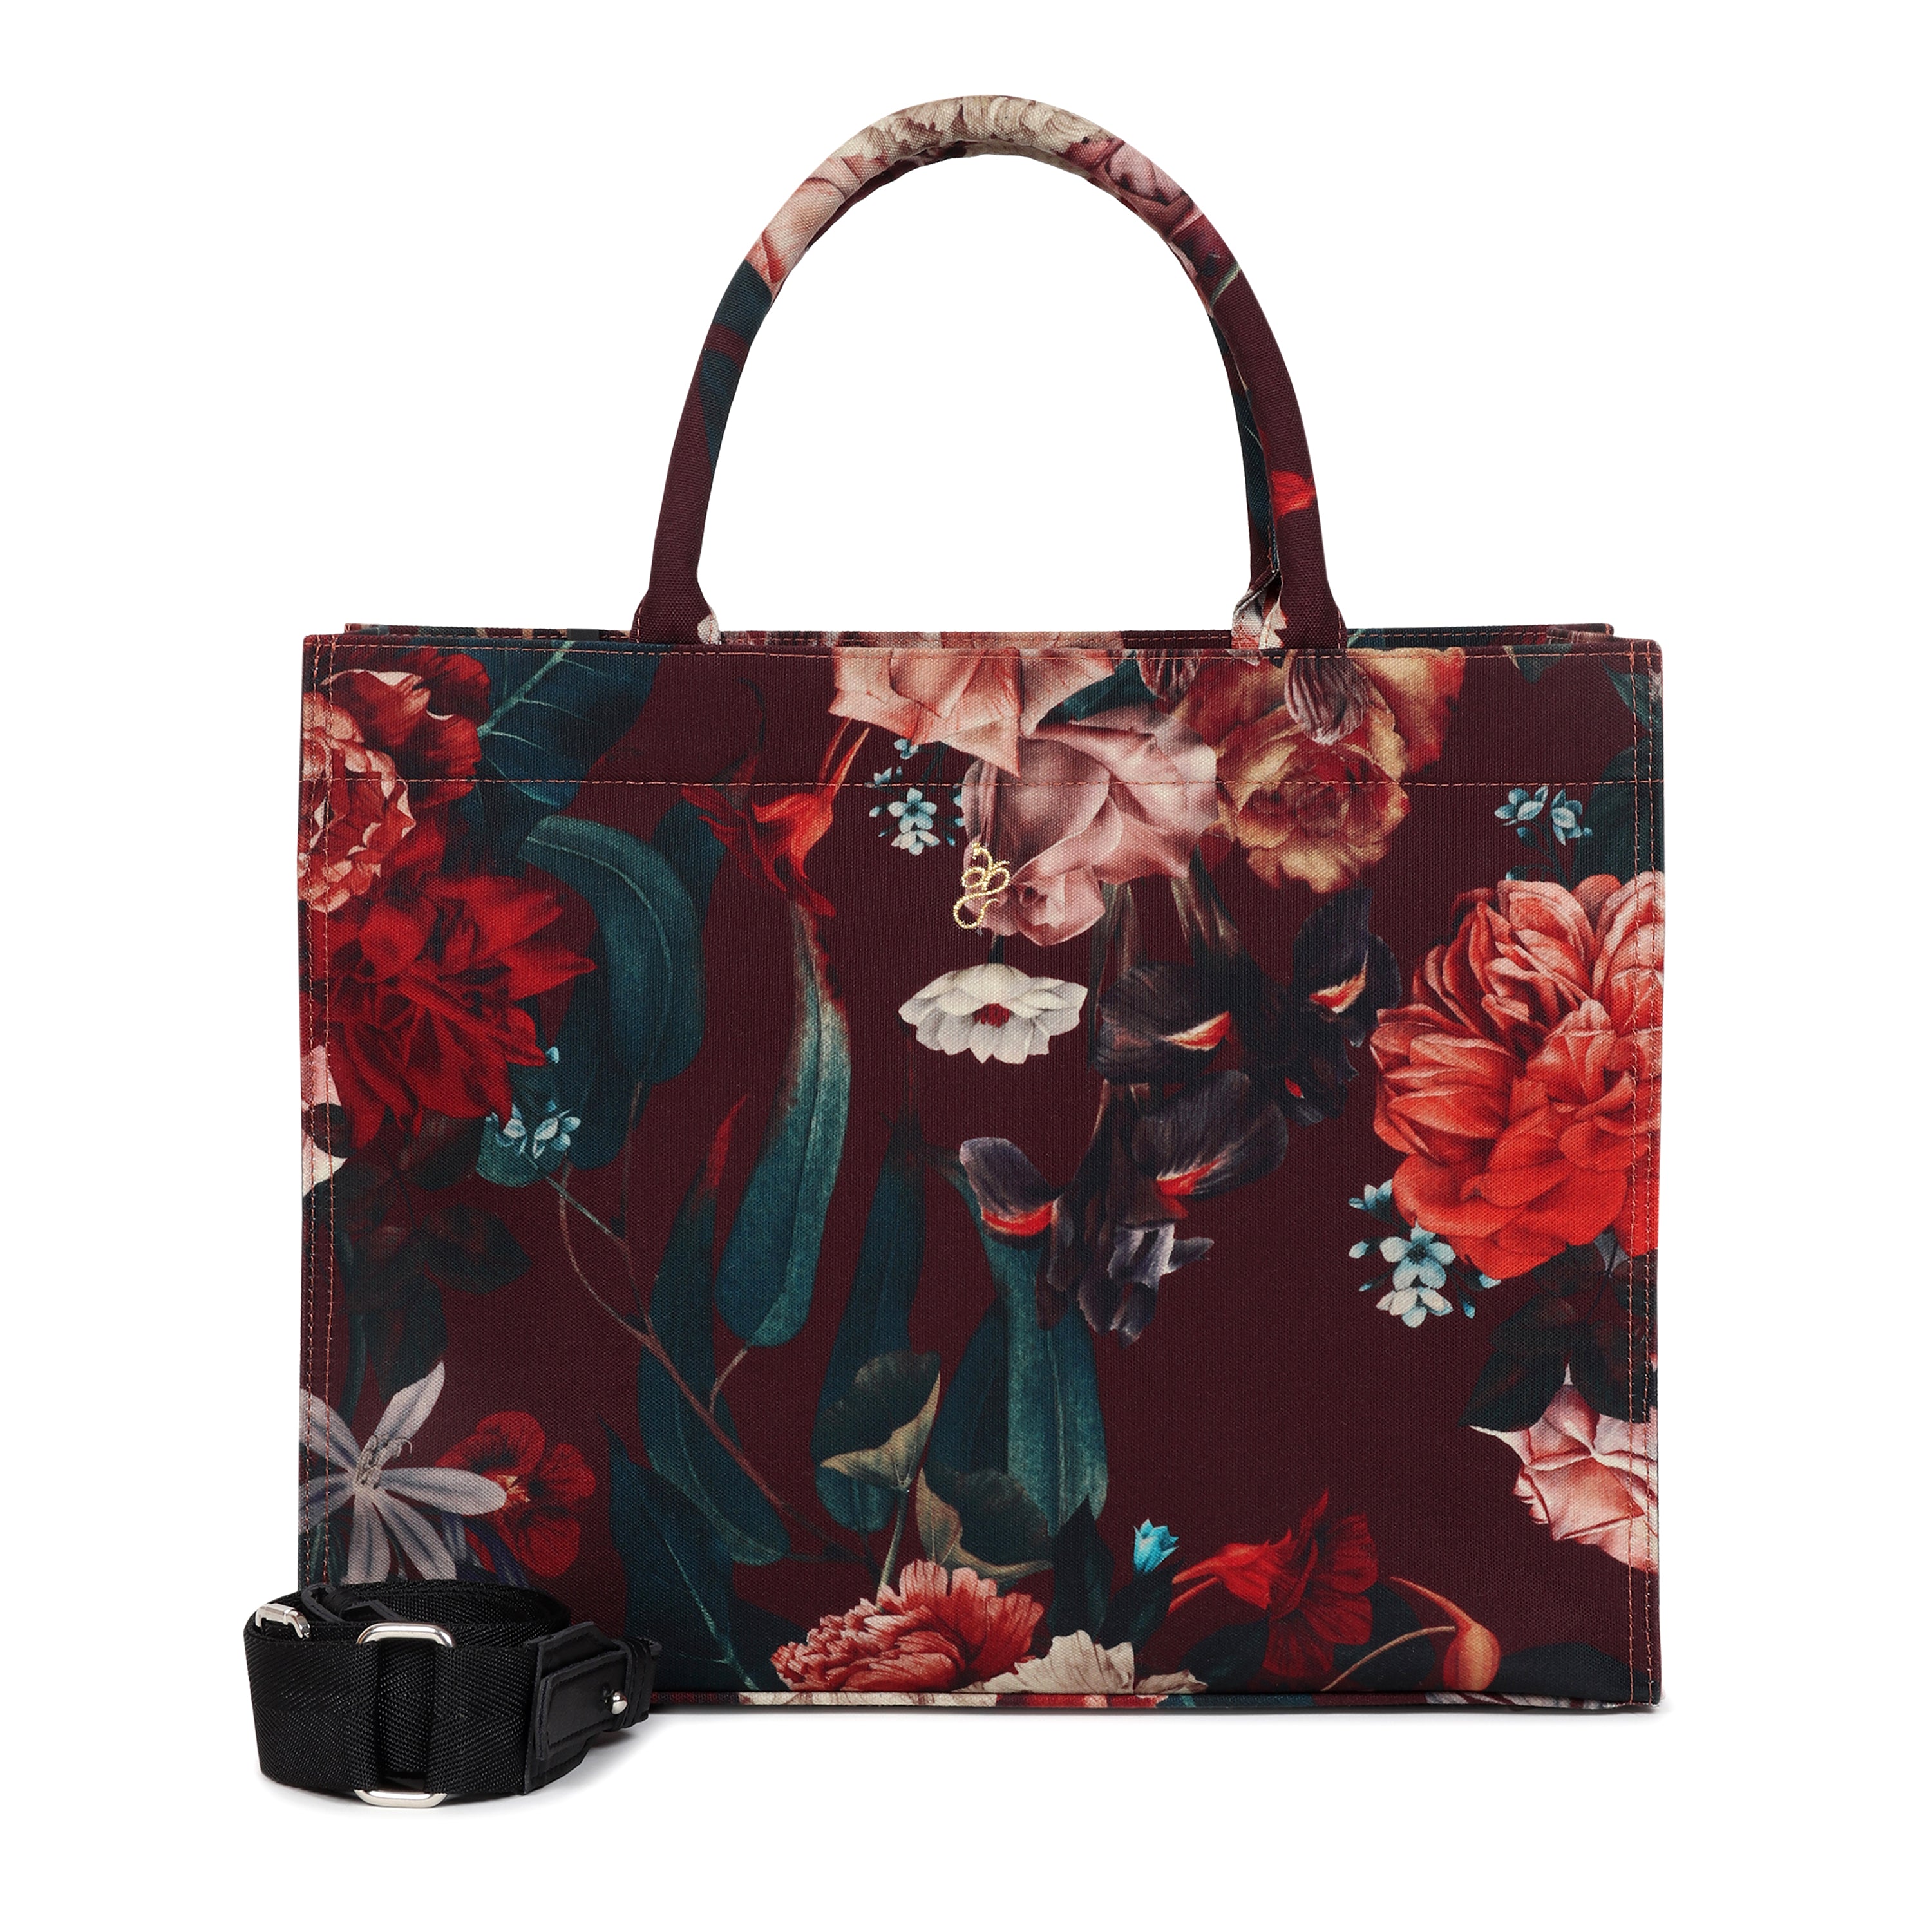 Autumn Handbag - Large